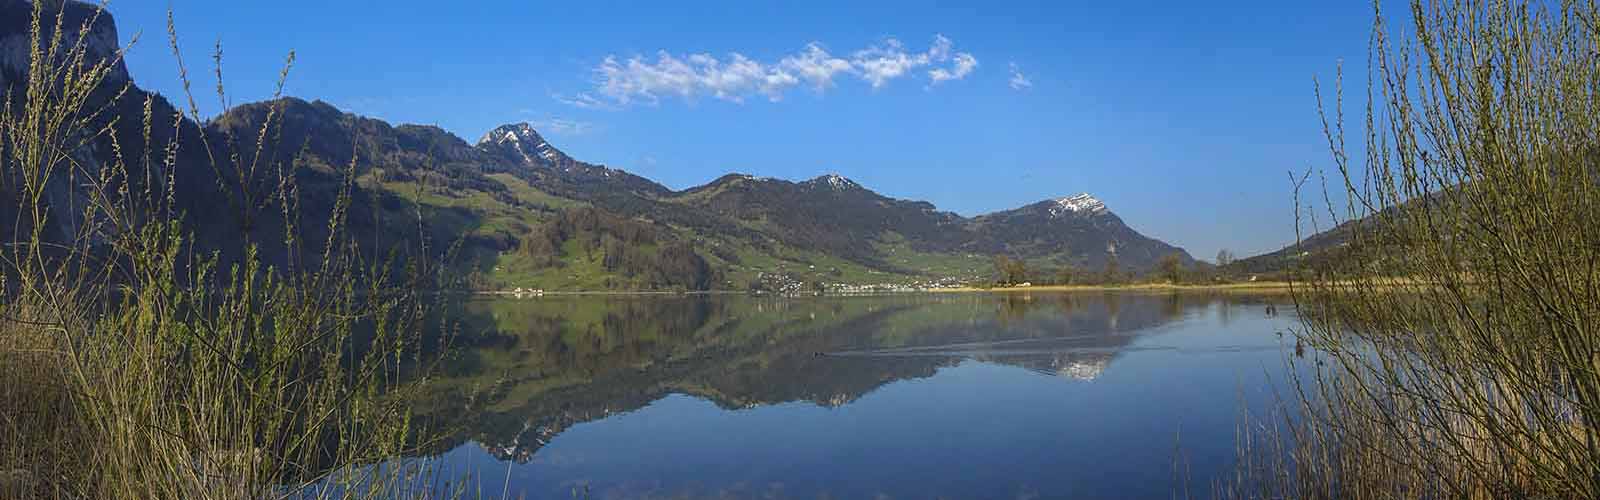 image-10607270-Schorenenbach-mündung_Panorama1-14.07.20-web-c9f0f.jpg?1594820265366